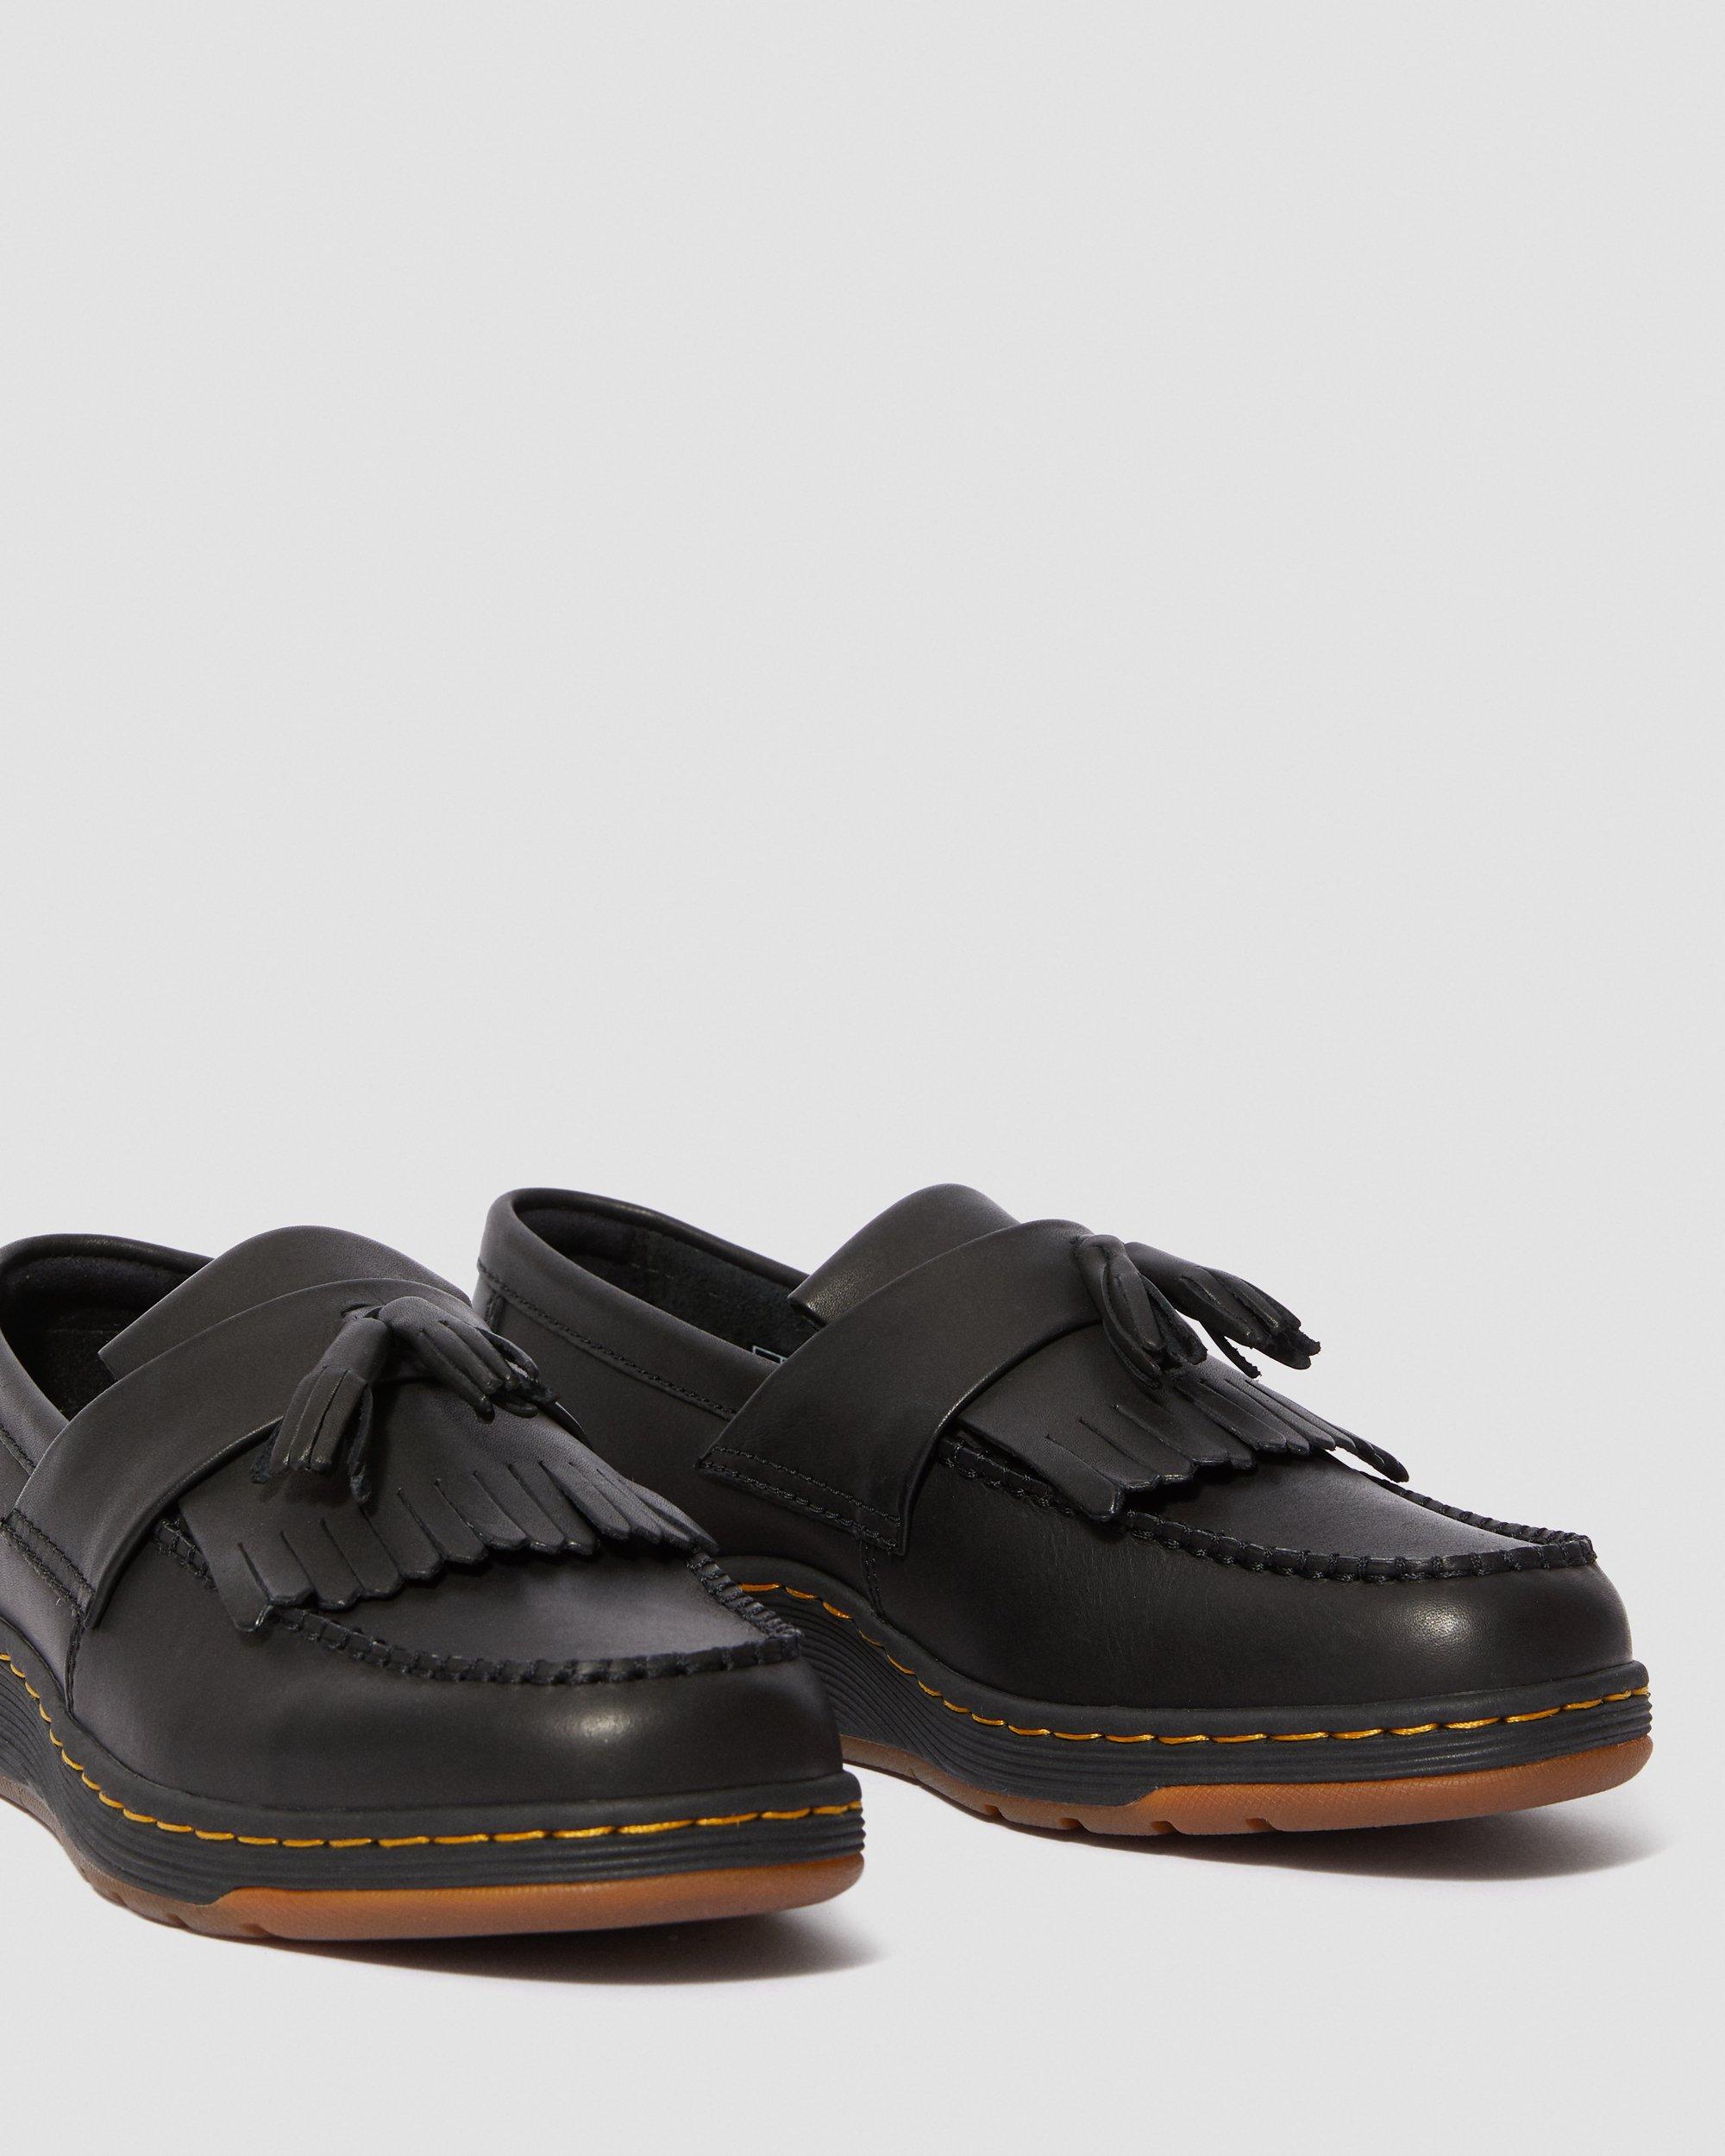 BNIB Dr Martens Edison Loafer 9 Polished Smooth Black Guaranteed Original 